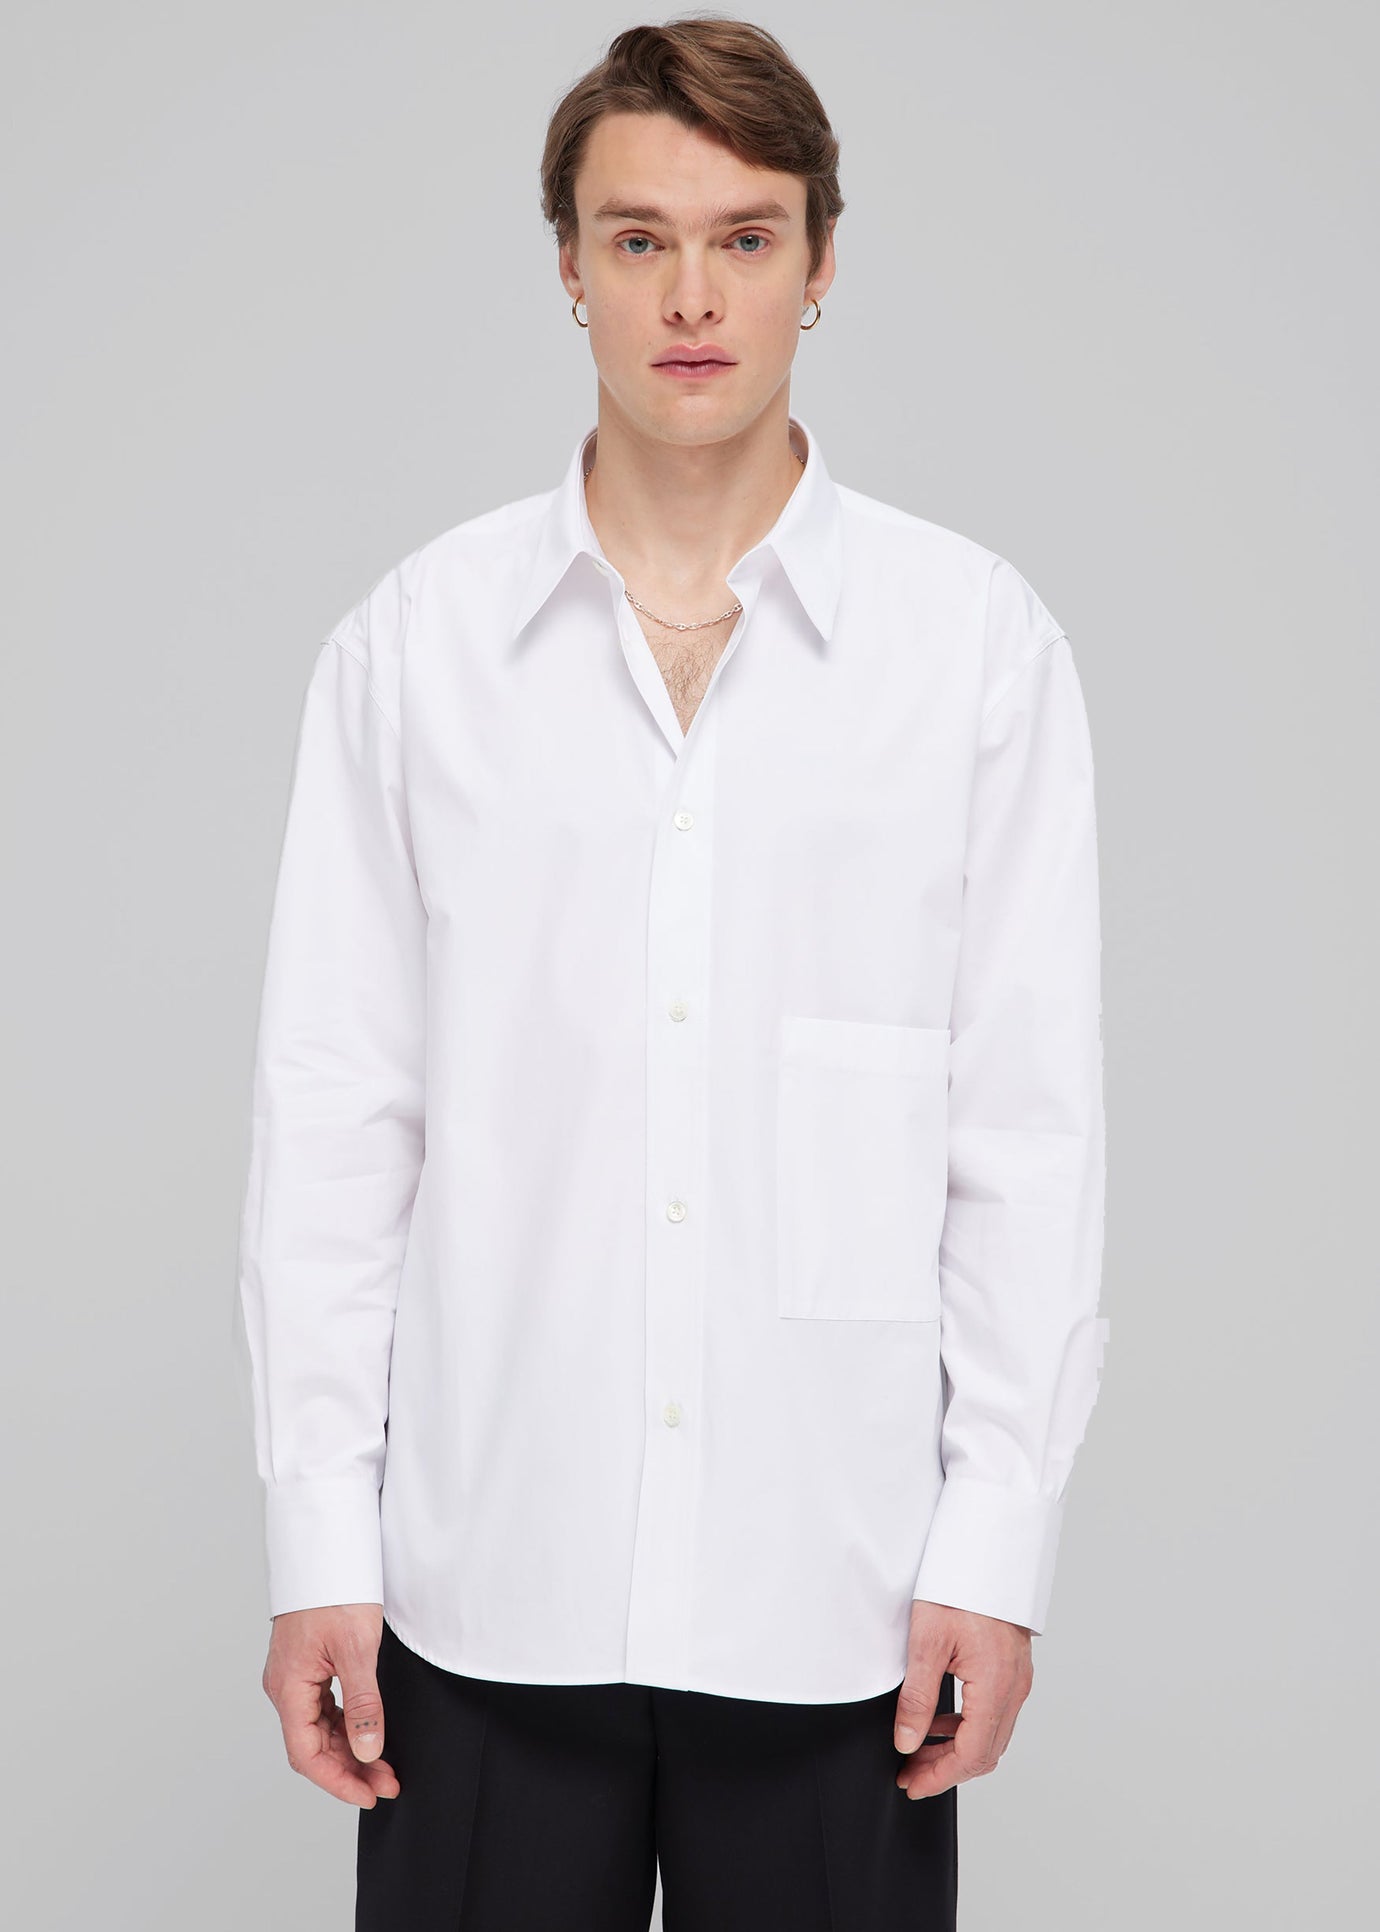 Róhe Unisex Classic Shirt - White